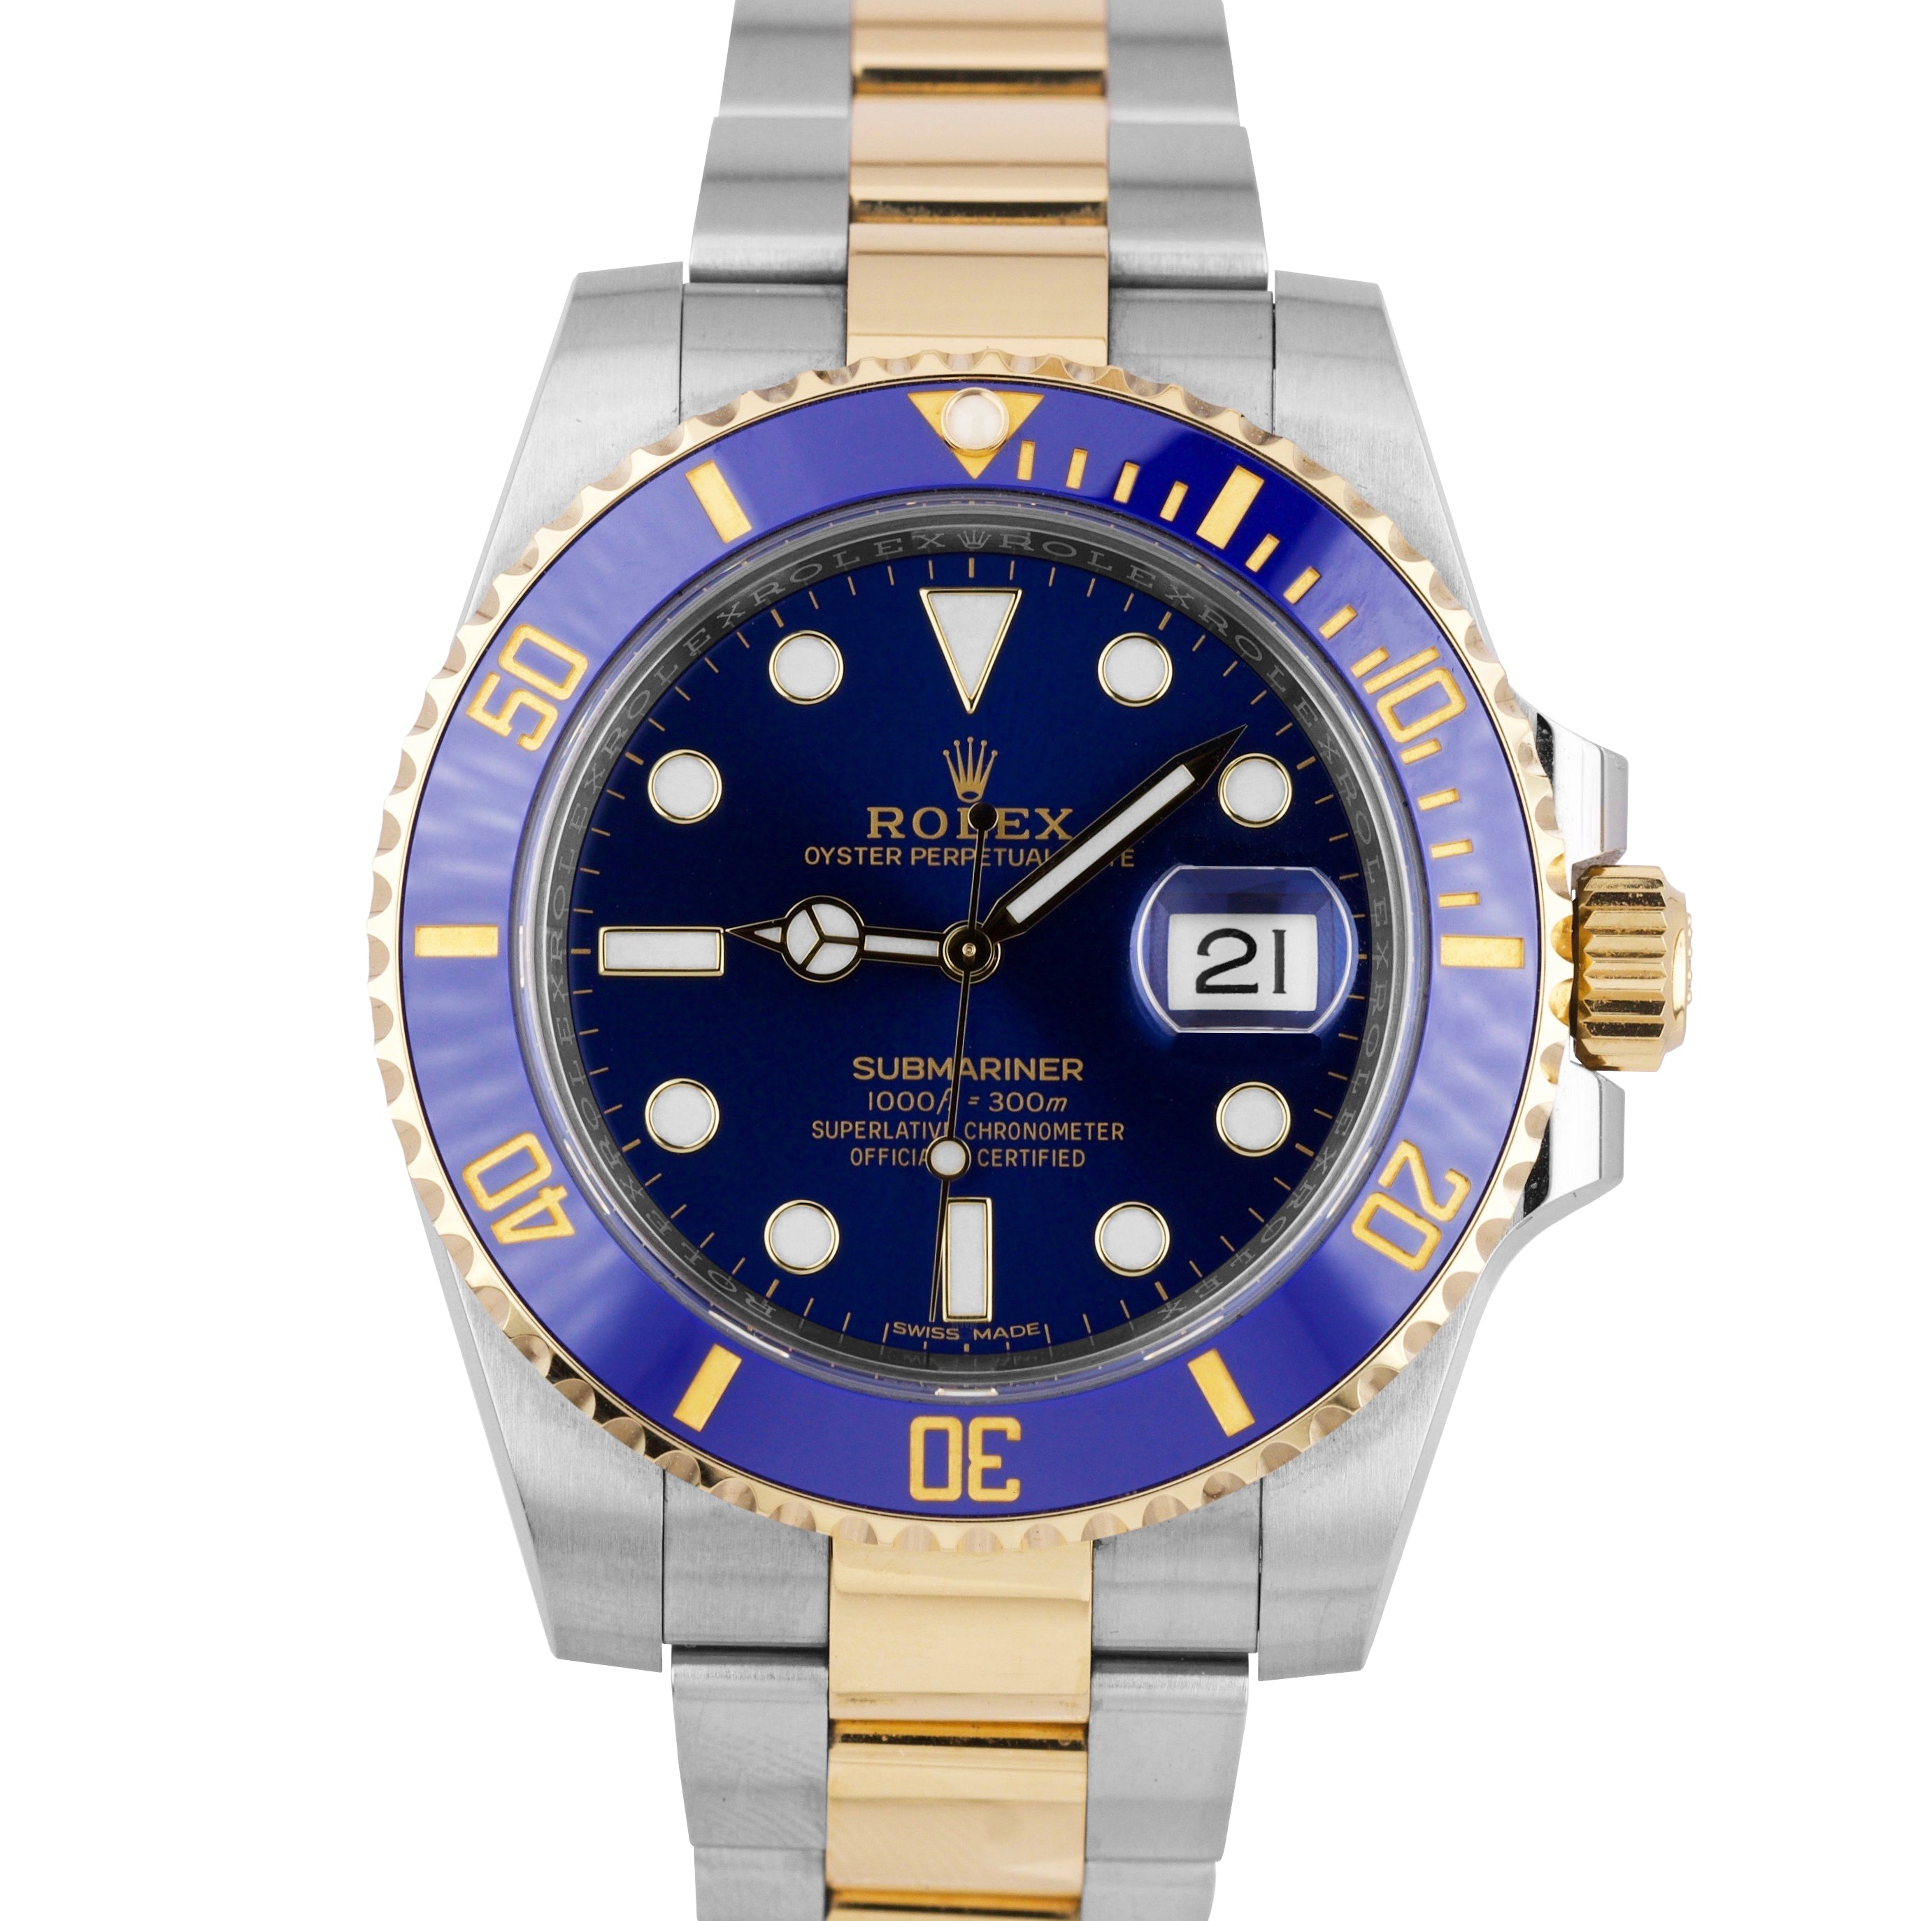 2017 Sunburst Rolex Submariner Ceramic 116613 LB Two-Tone Gold Blue Dive Watch